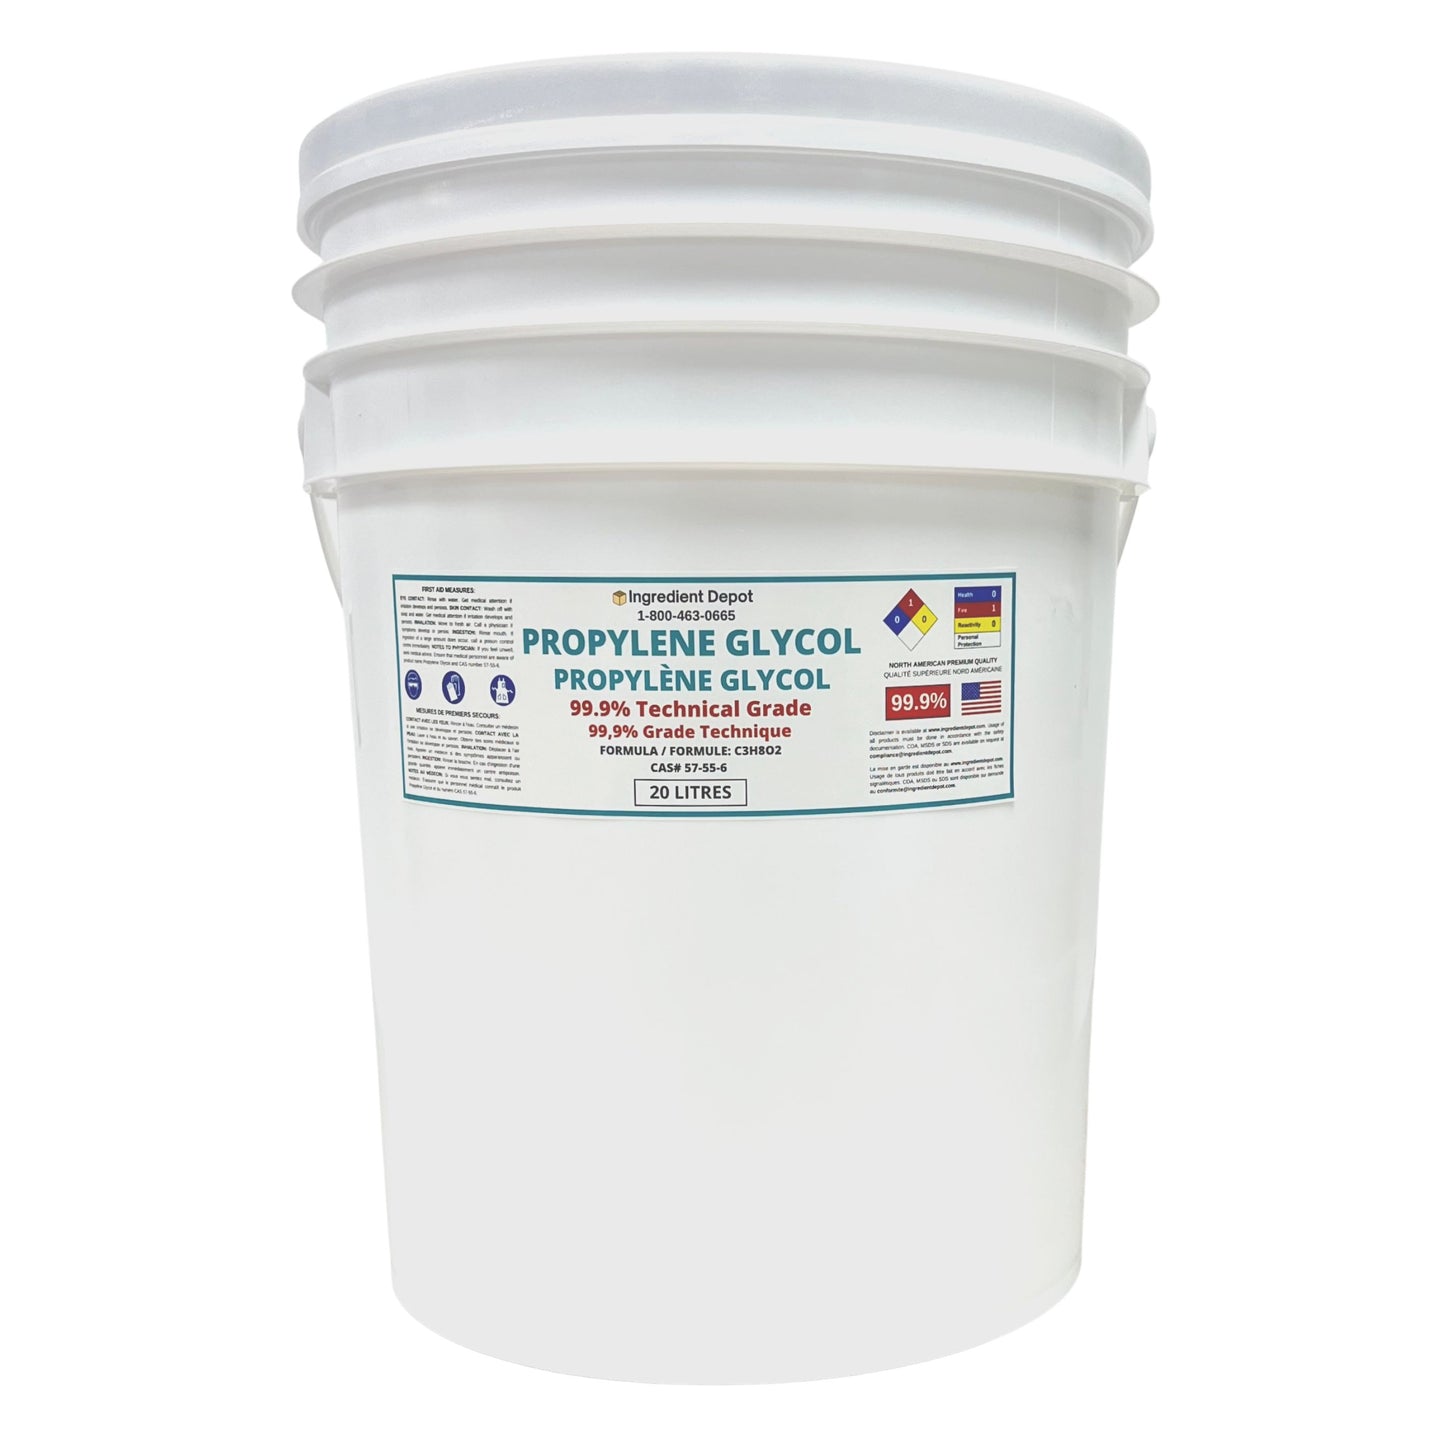 Propylene Glycol 99.9% Technical Grade 20 litres - IngredientDepot.com